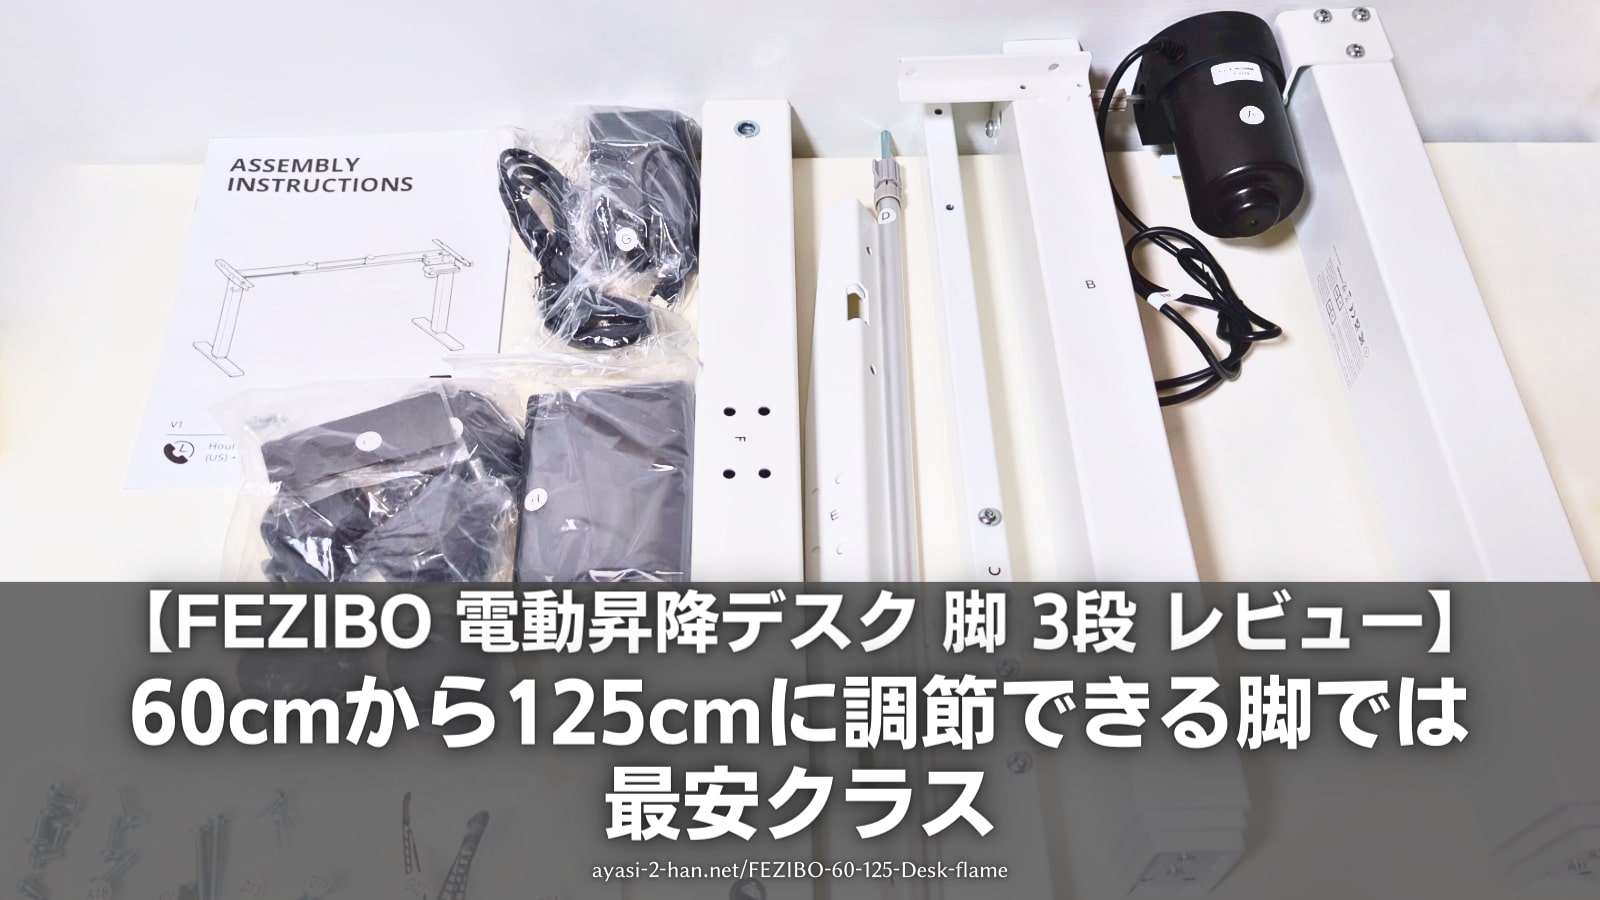 FEZIBO-60-125-Desk-flame-EyeCatch